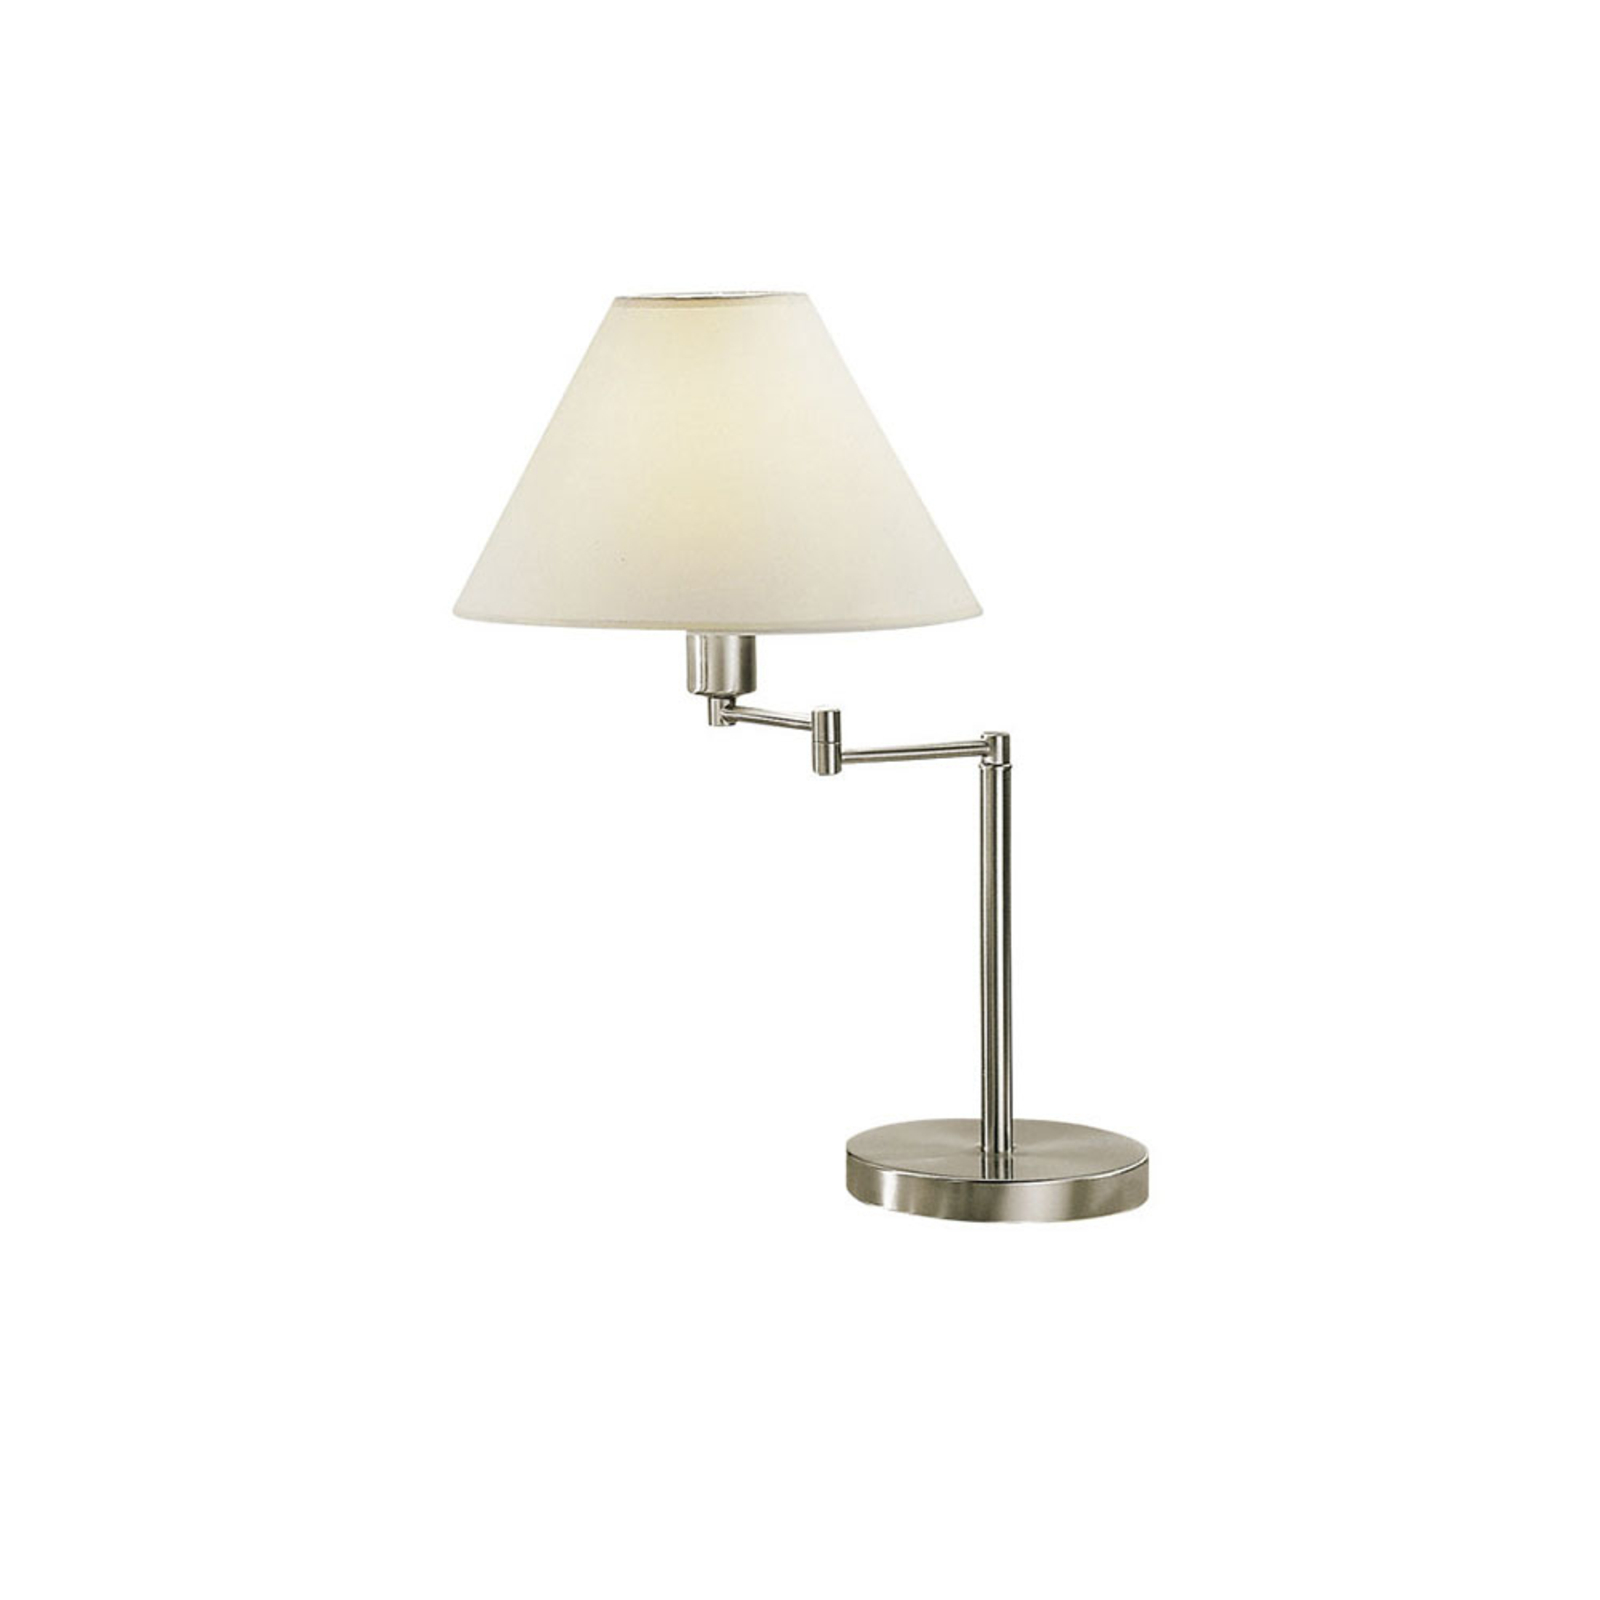 Hilton table lamp, pivotable, nickel